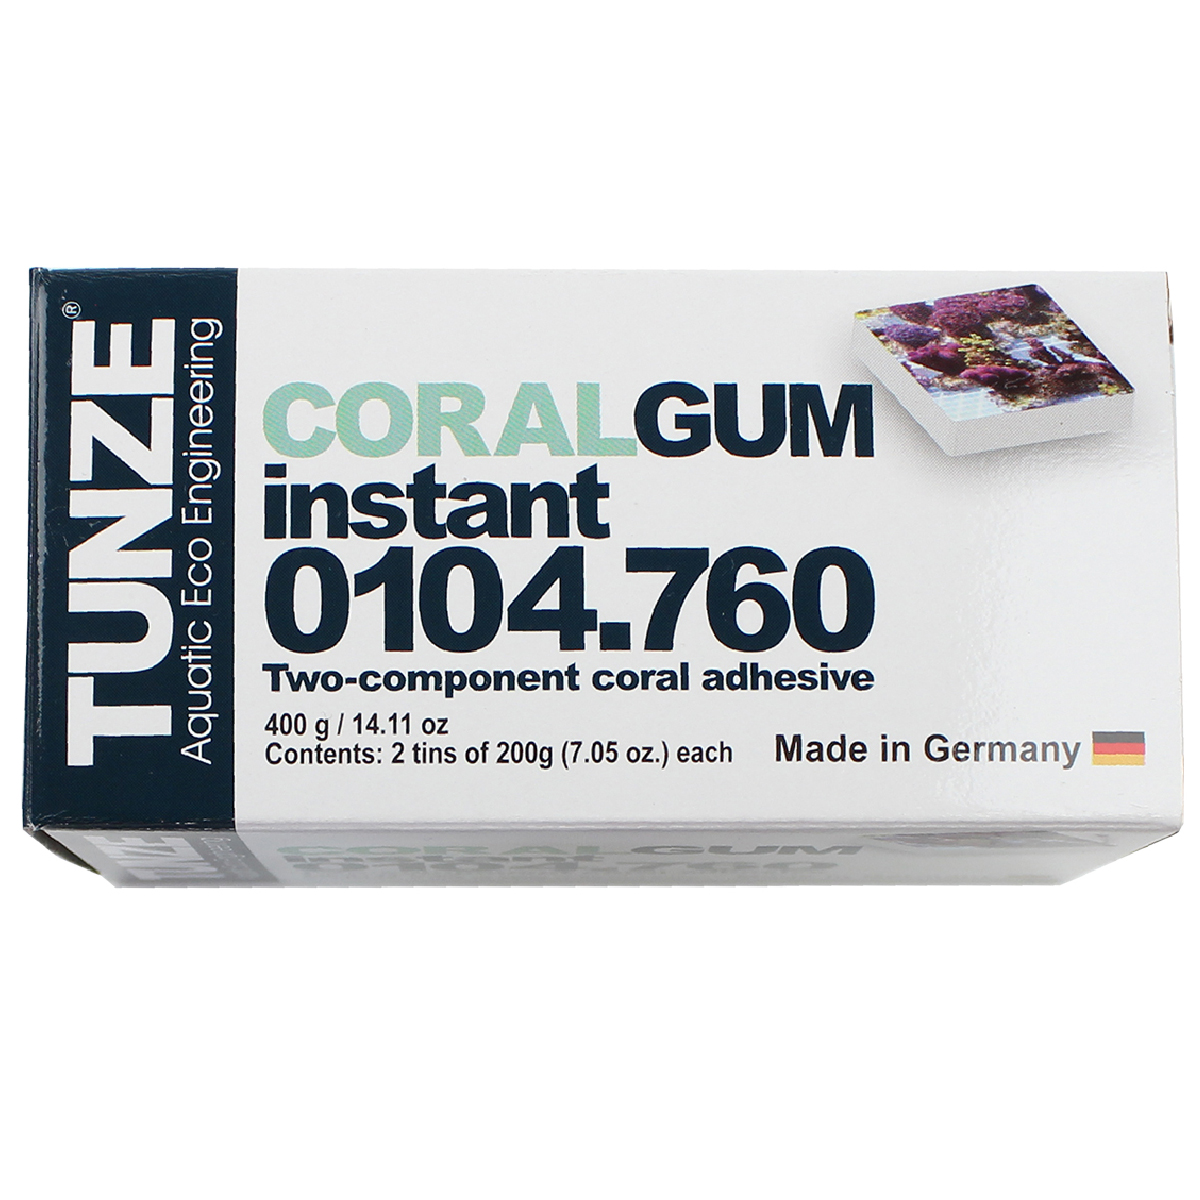 Coral Gum instant, 400 g